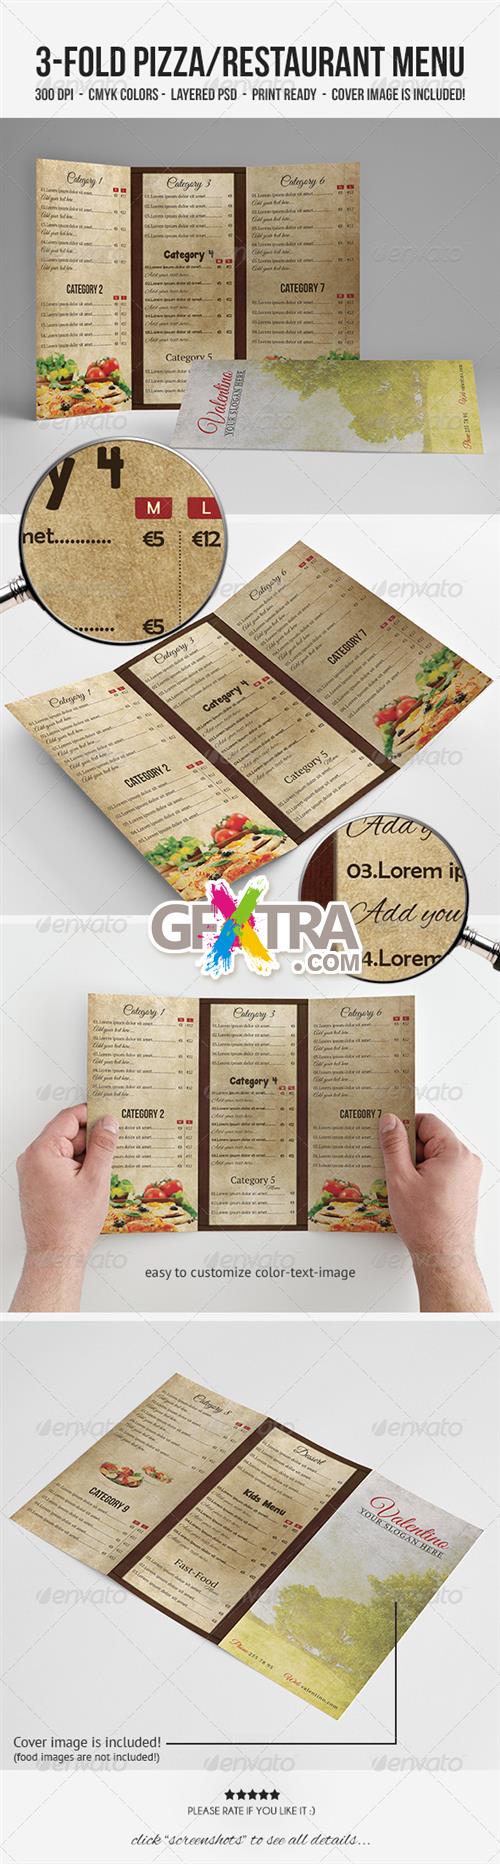 GraphicRiver - 3-Fold Pizza/Restaurant Menu